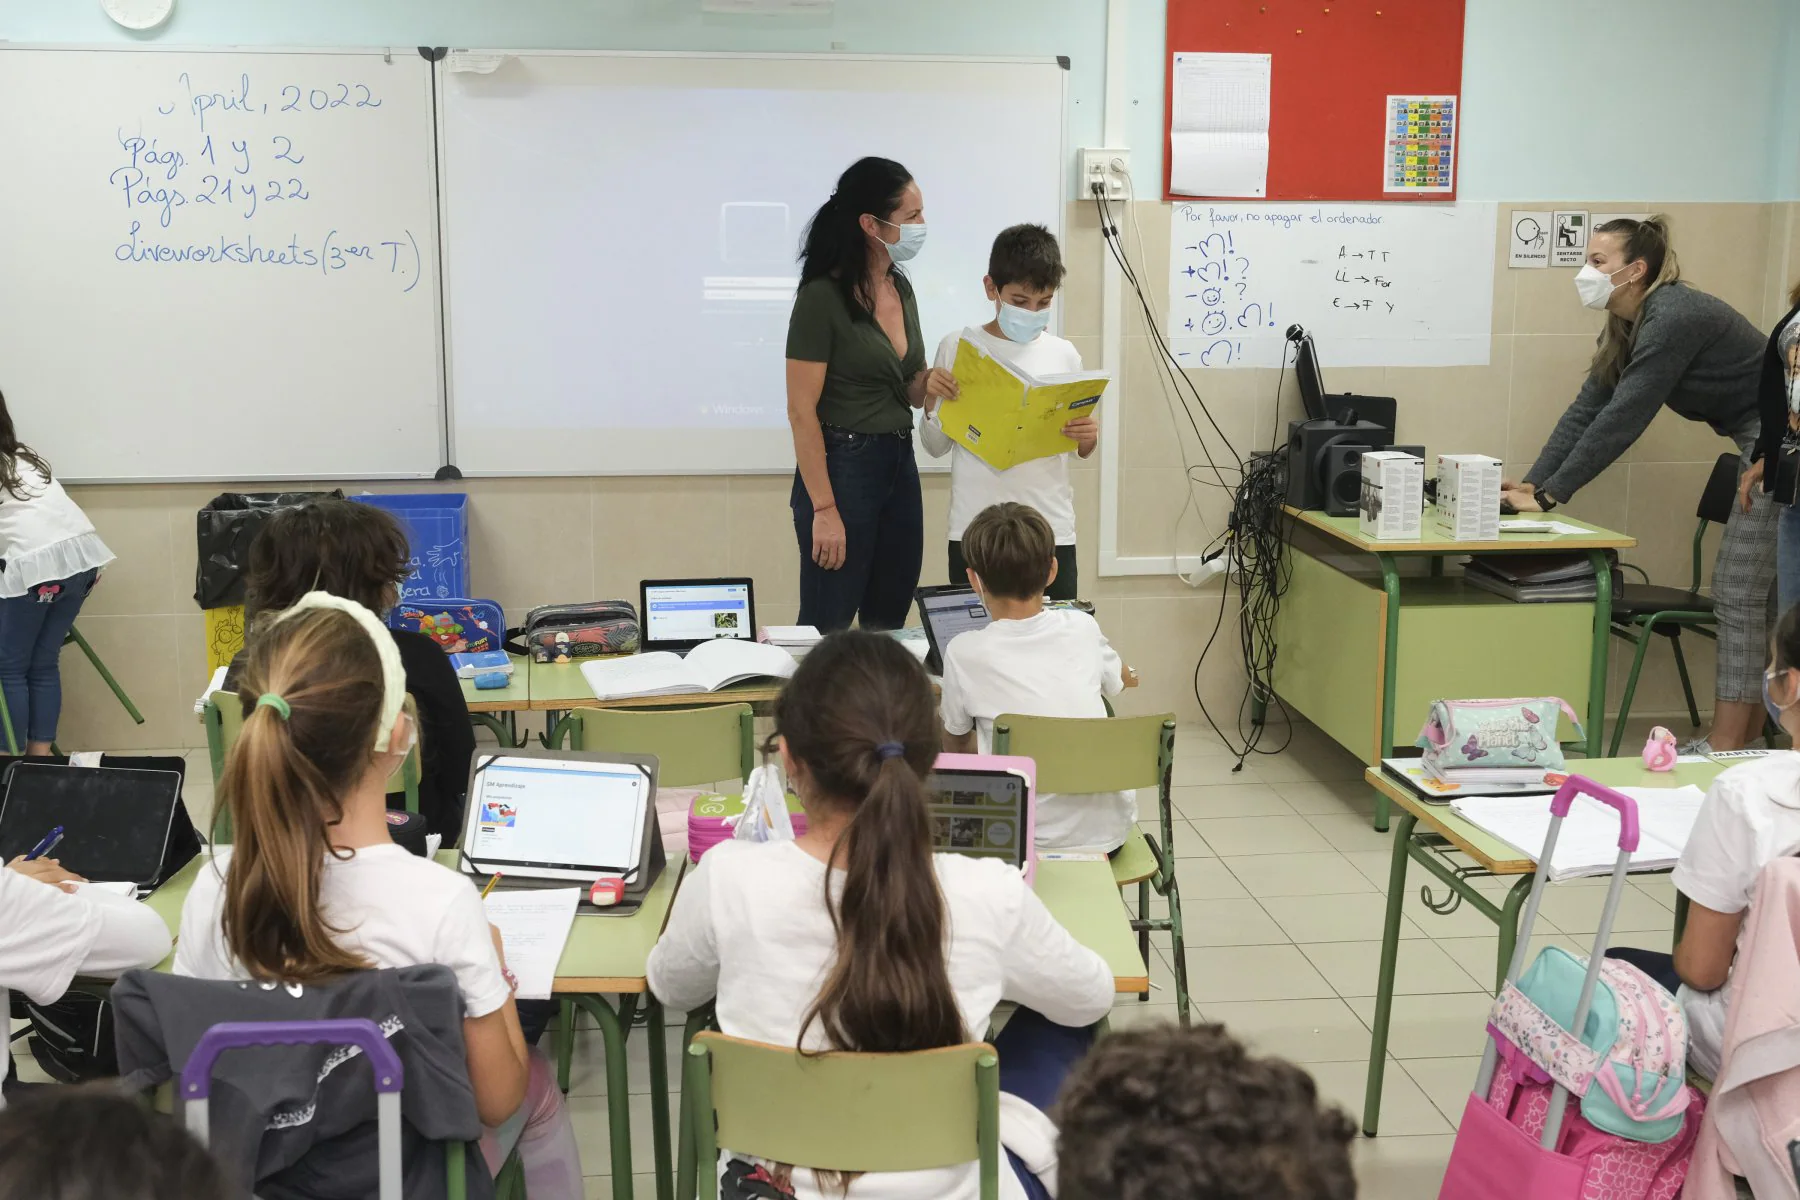 Archive photo of a class at El Tablero public school. 